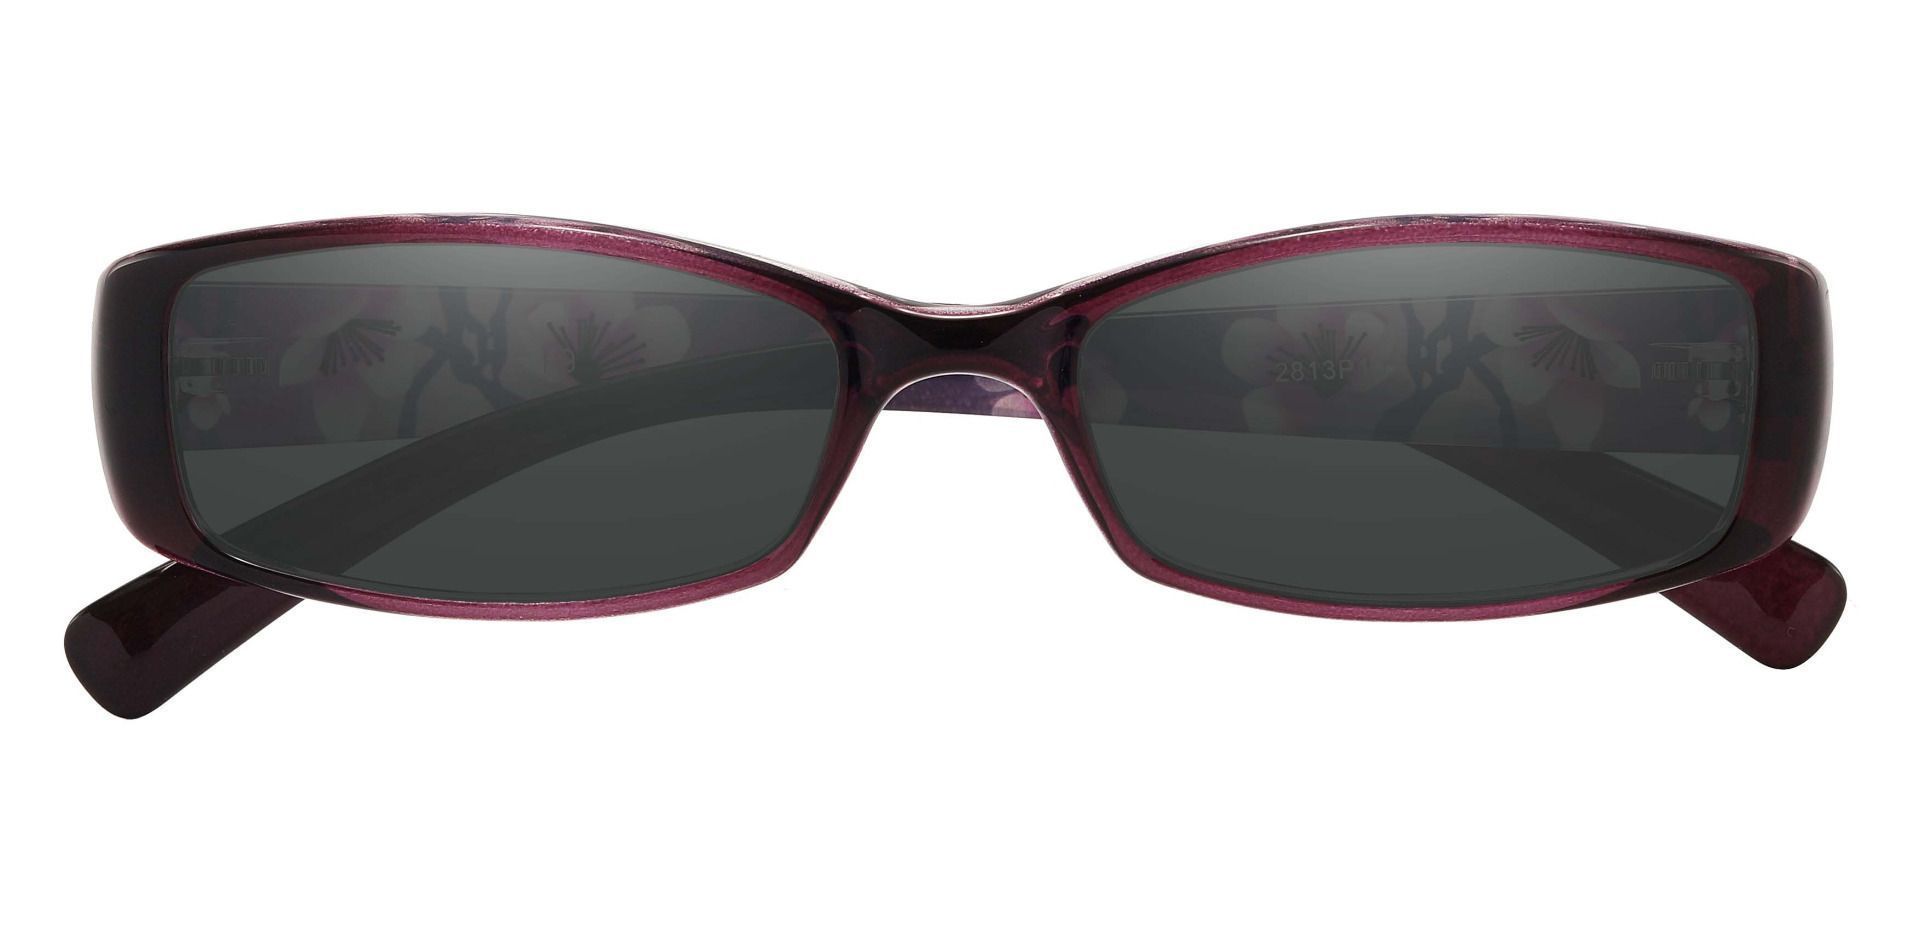 Medora Rectangle Non-Rx Sunglasses - Purple Frame With Gray Lenses